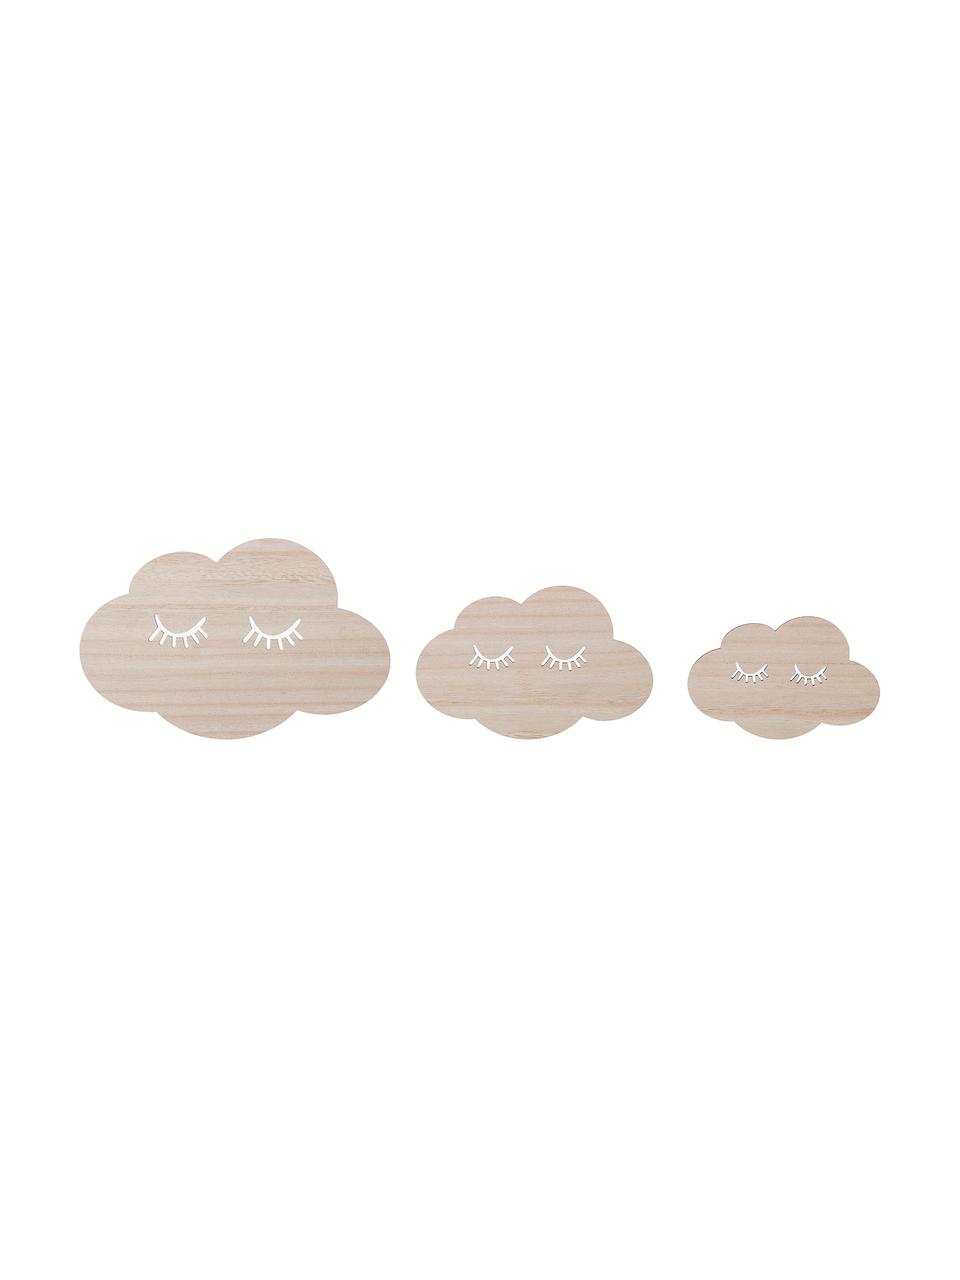 Wandobjectenset Clouds, 3-delig, Hout, Bruin, 21 x 14 cm